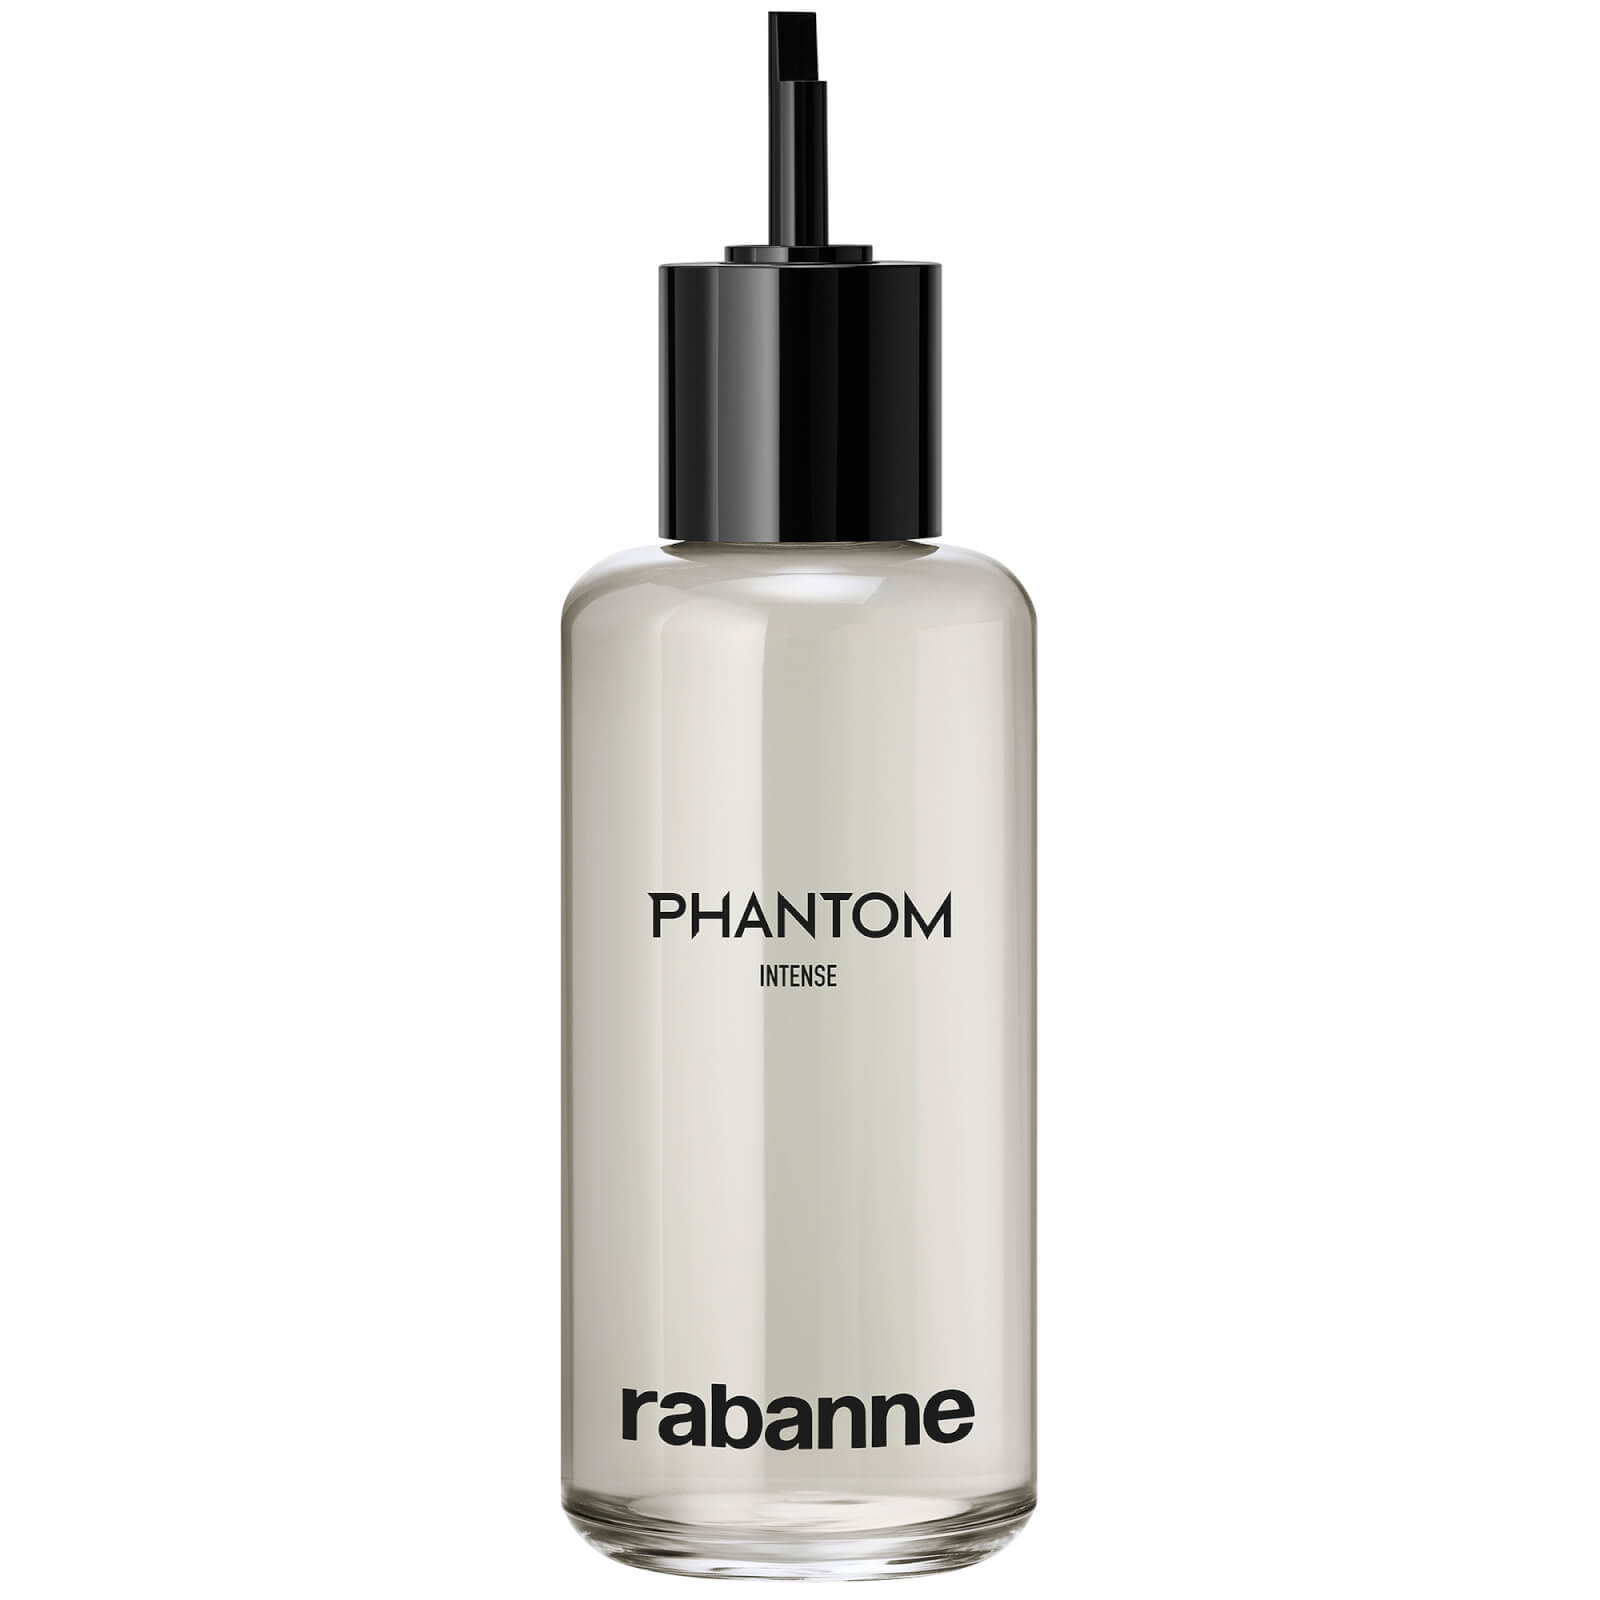 Image of Rabanne Phantom Intense Eau de Parfum Profumo Intense Refill 200ml